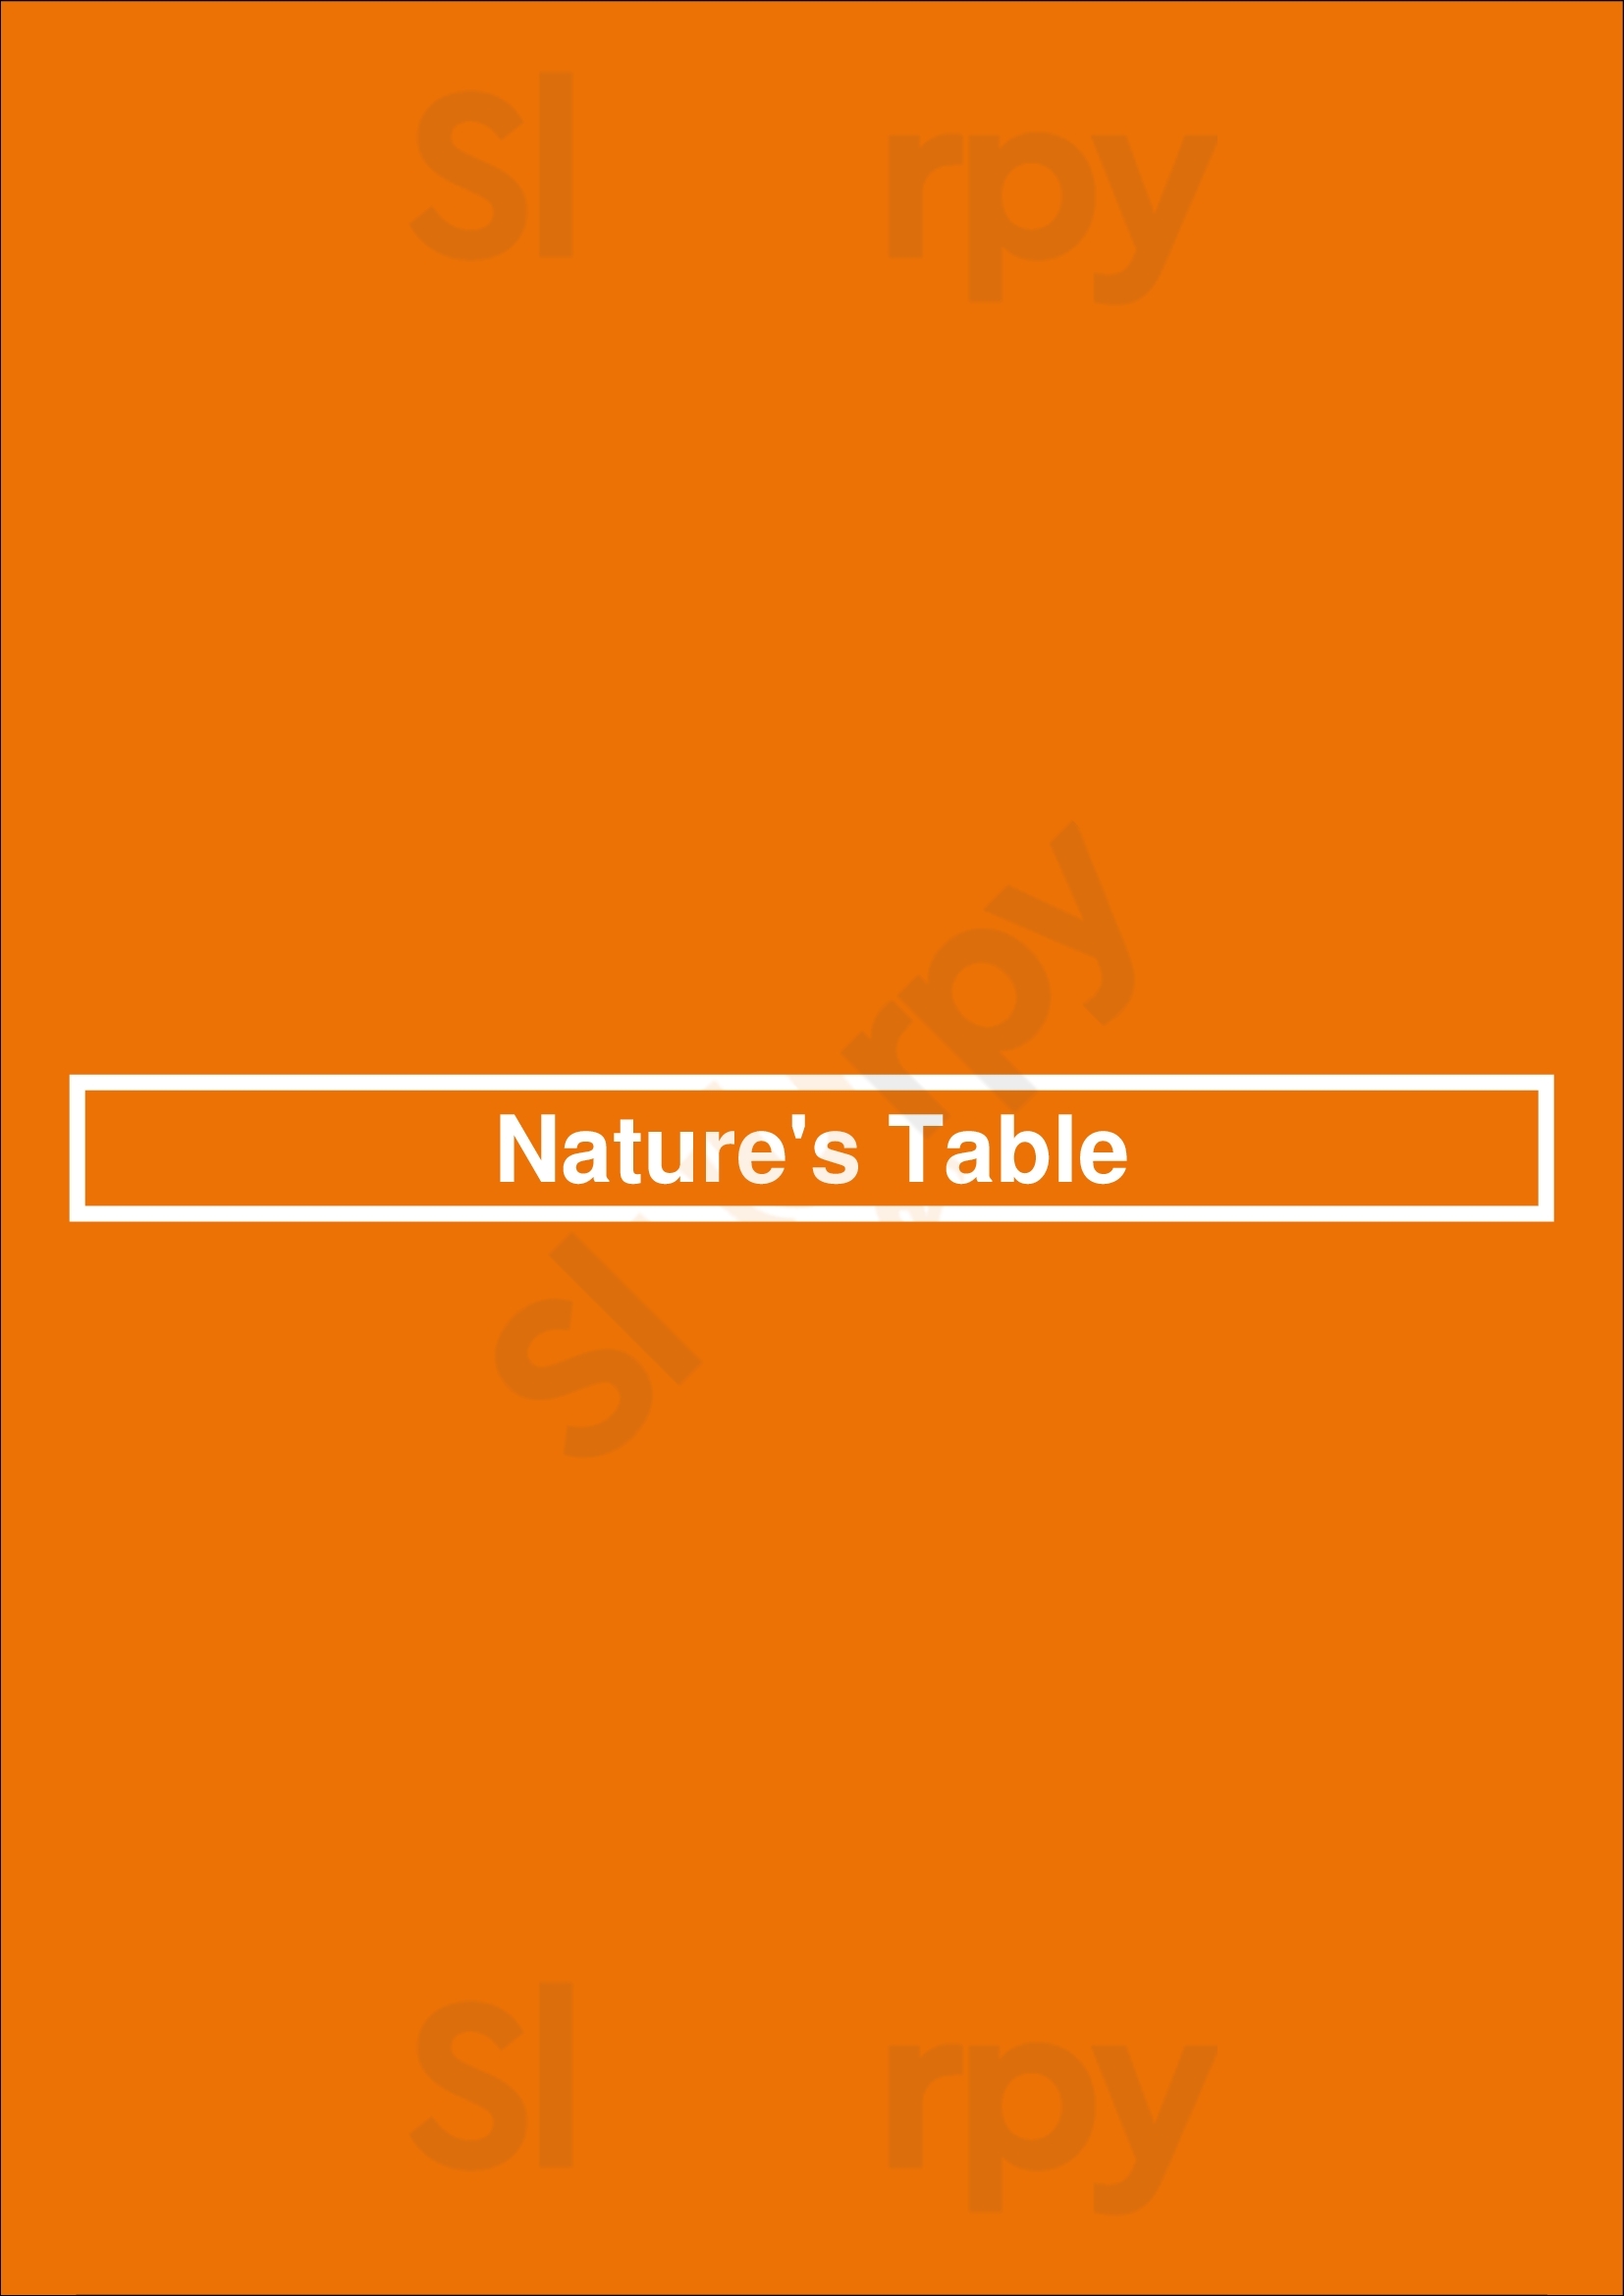 Nature's Table Orlando Menu - 1